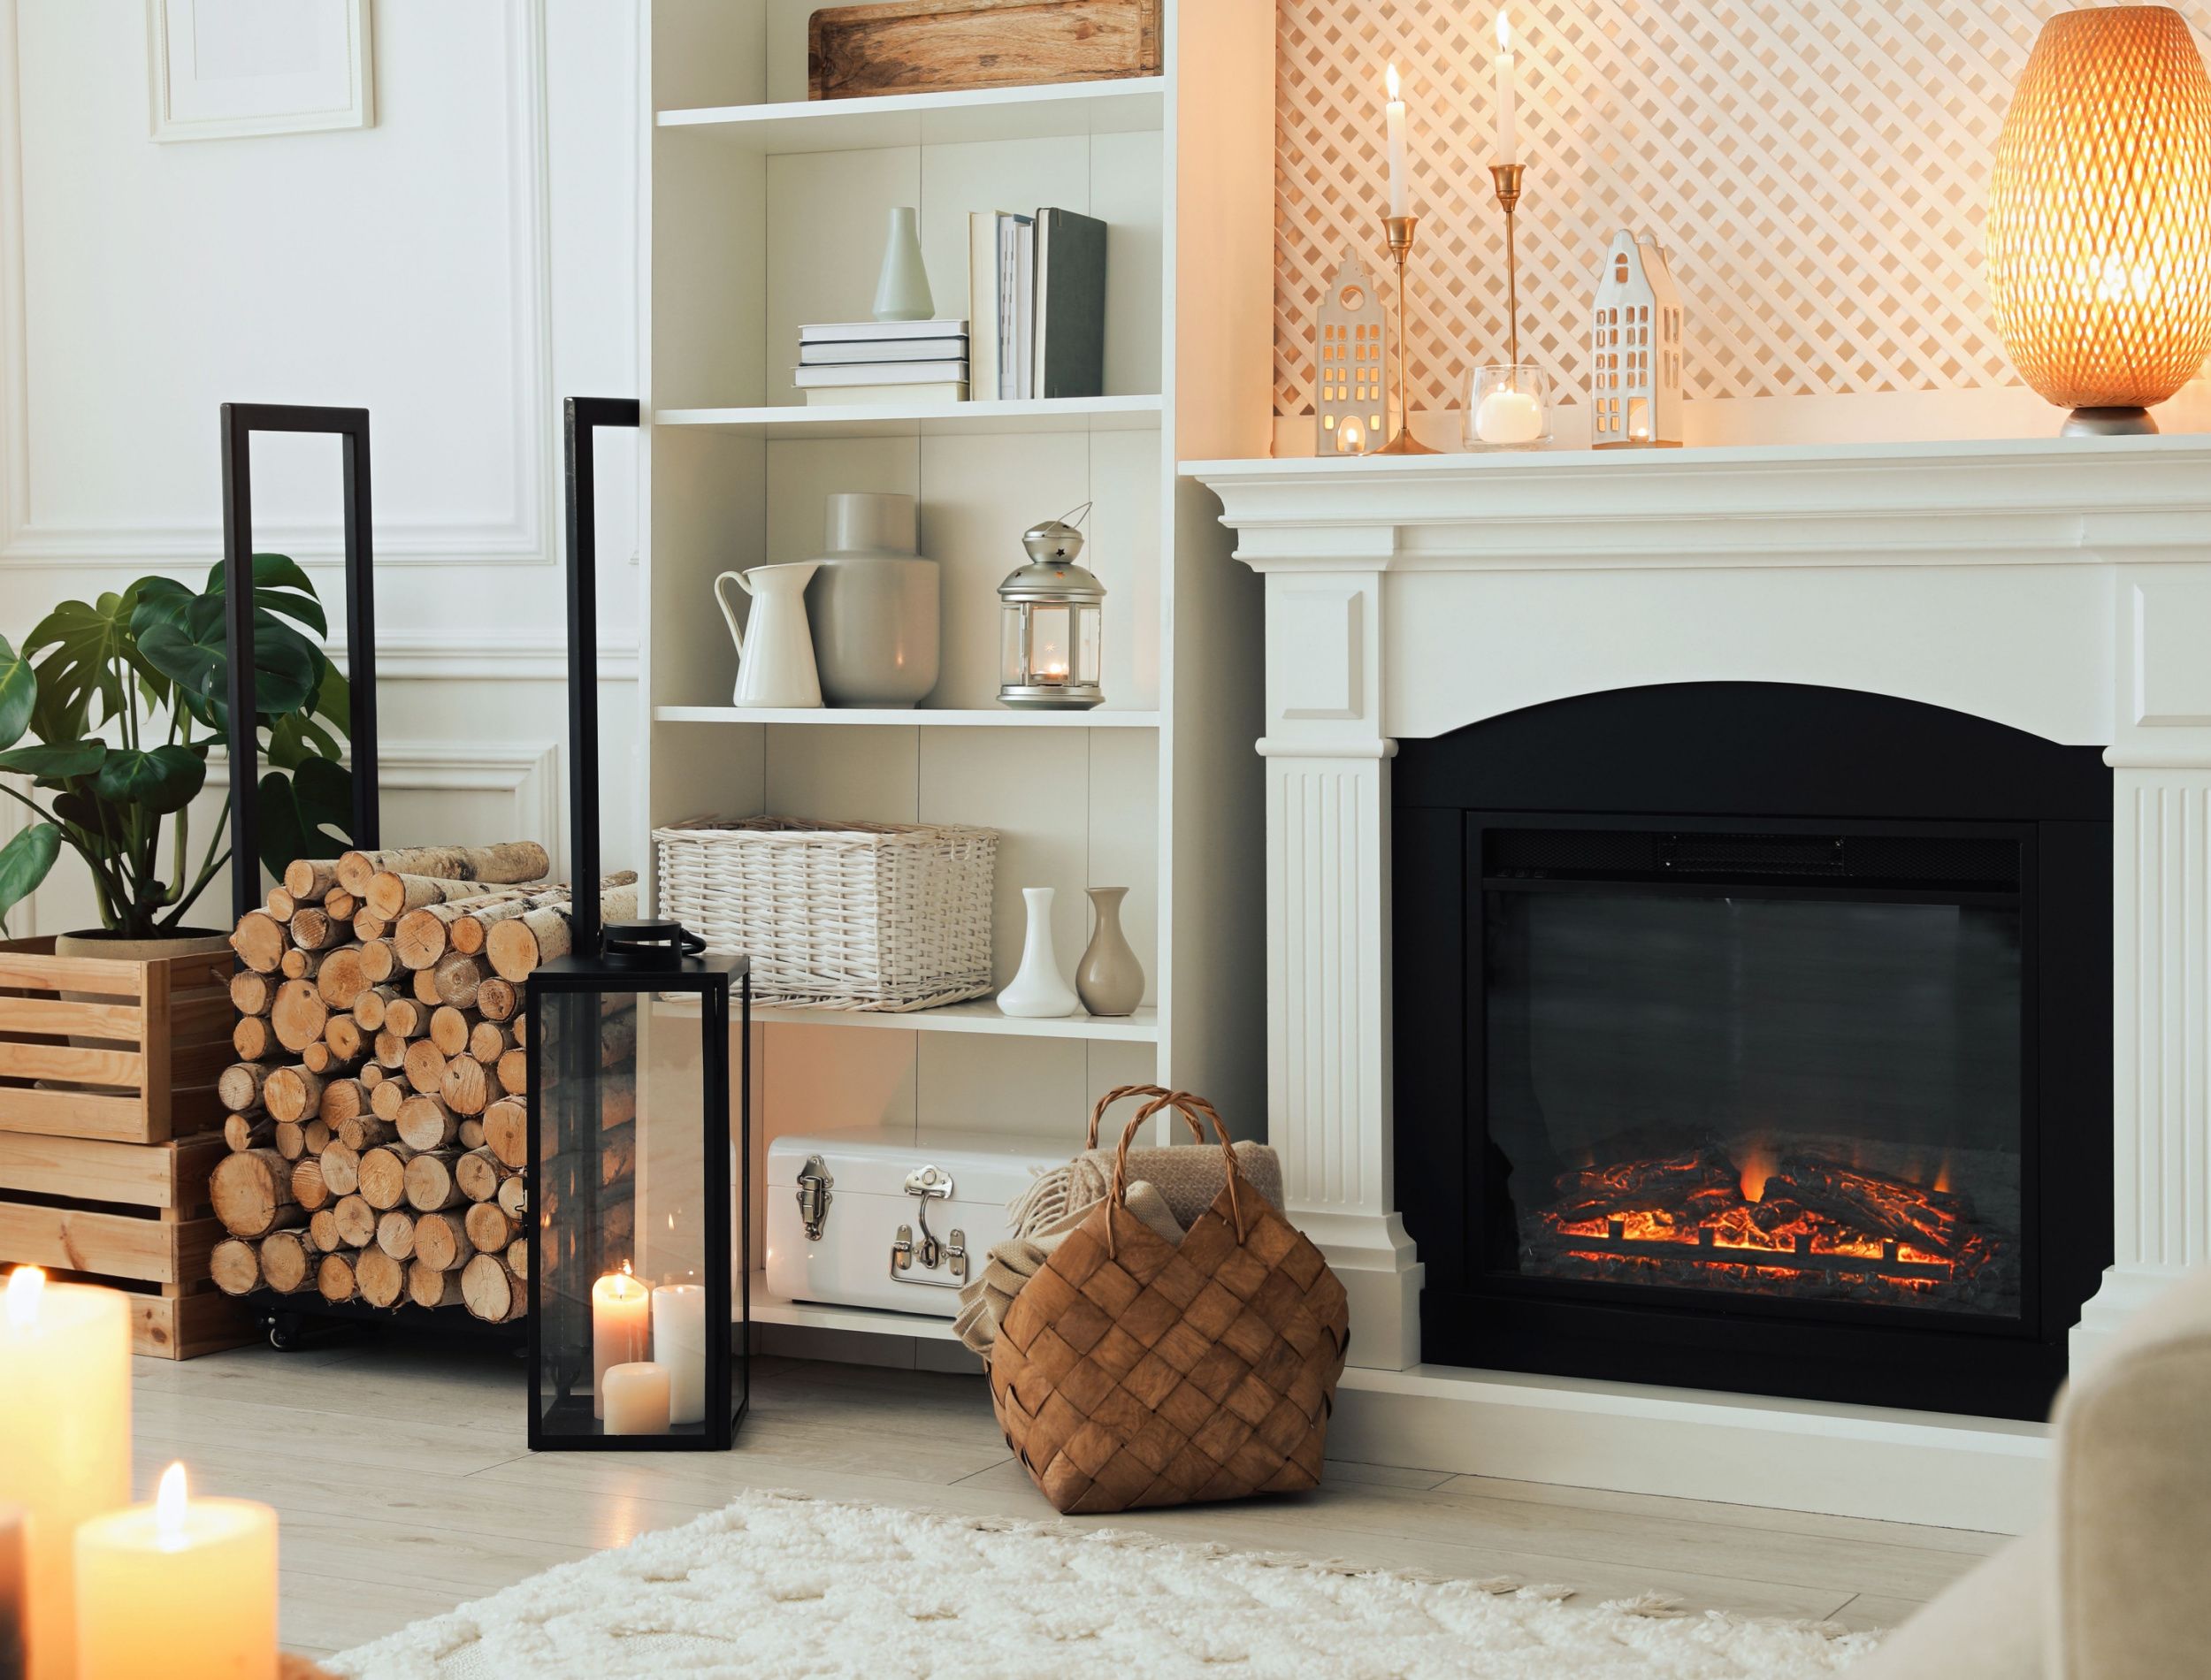 Stylish living room with fireplace and firewood log rack